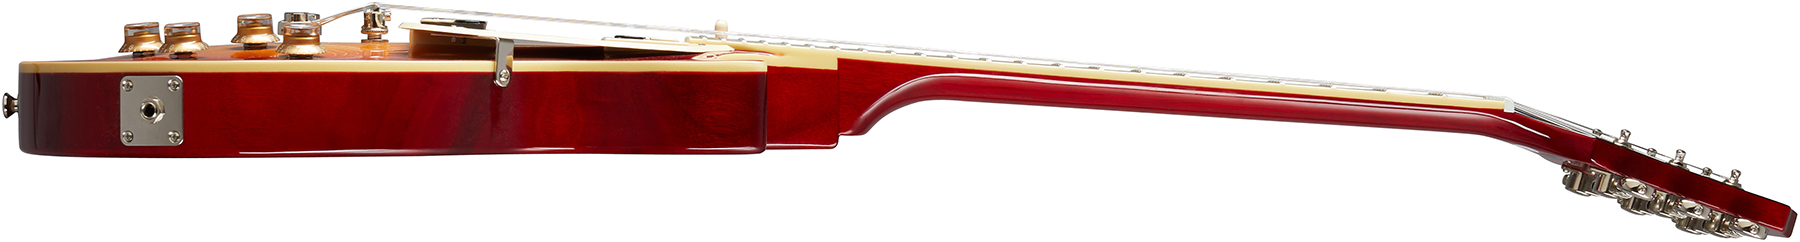 Epiphone Les Paul Classic Modern 2020 2h Ht Lau - Heritage Cherry Sunburst - Enkel gesneden elektrische gitaar - Variation 2